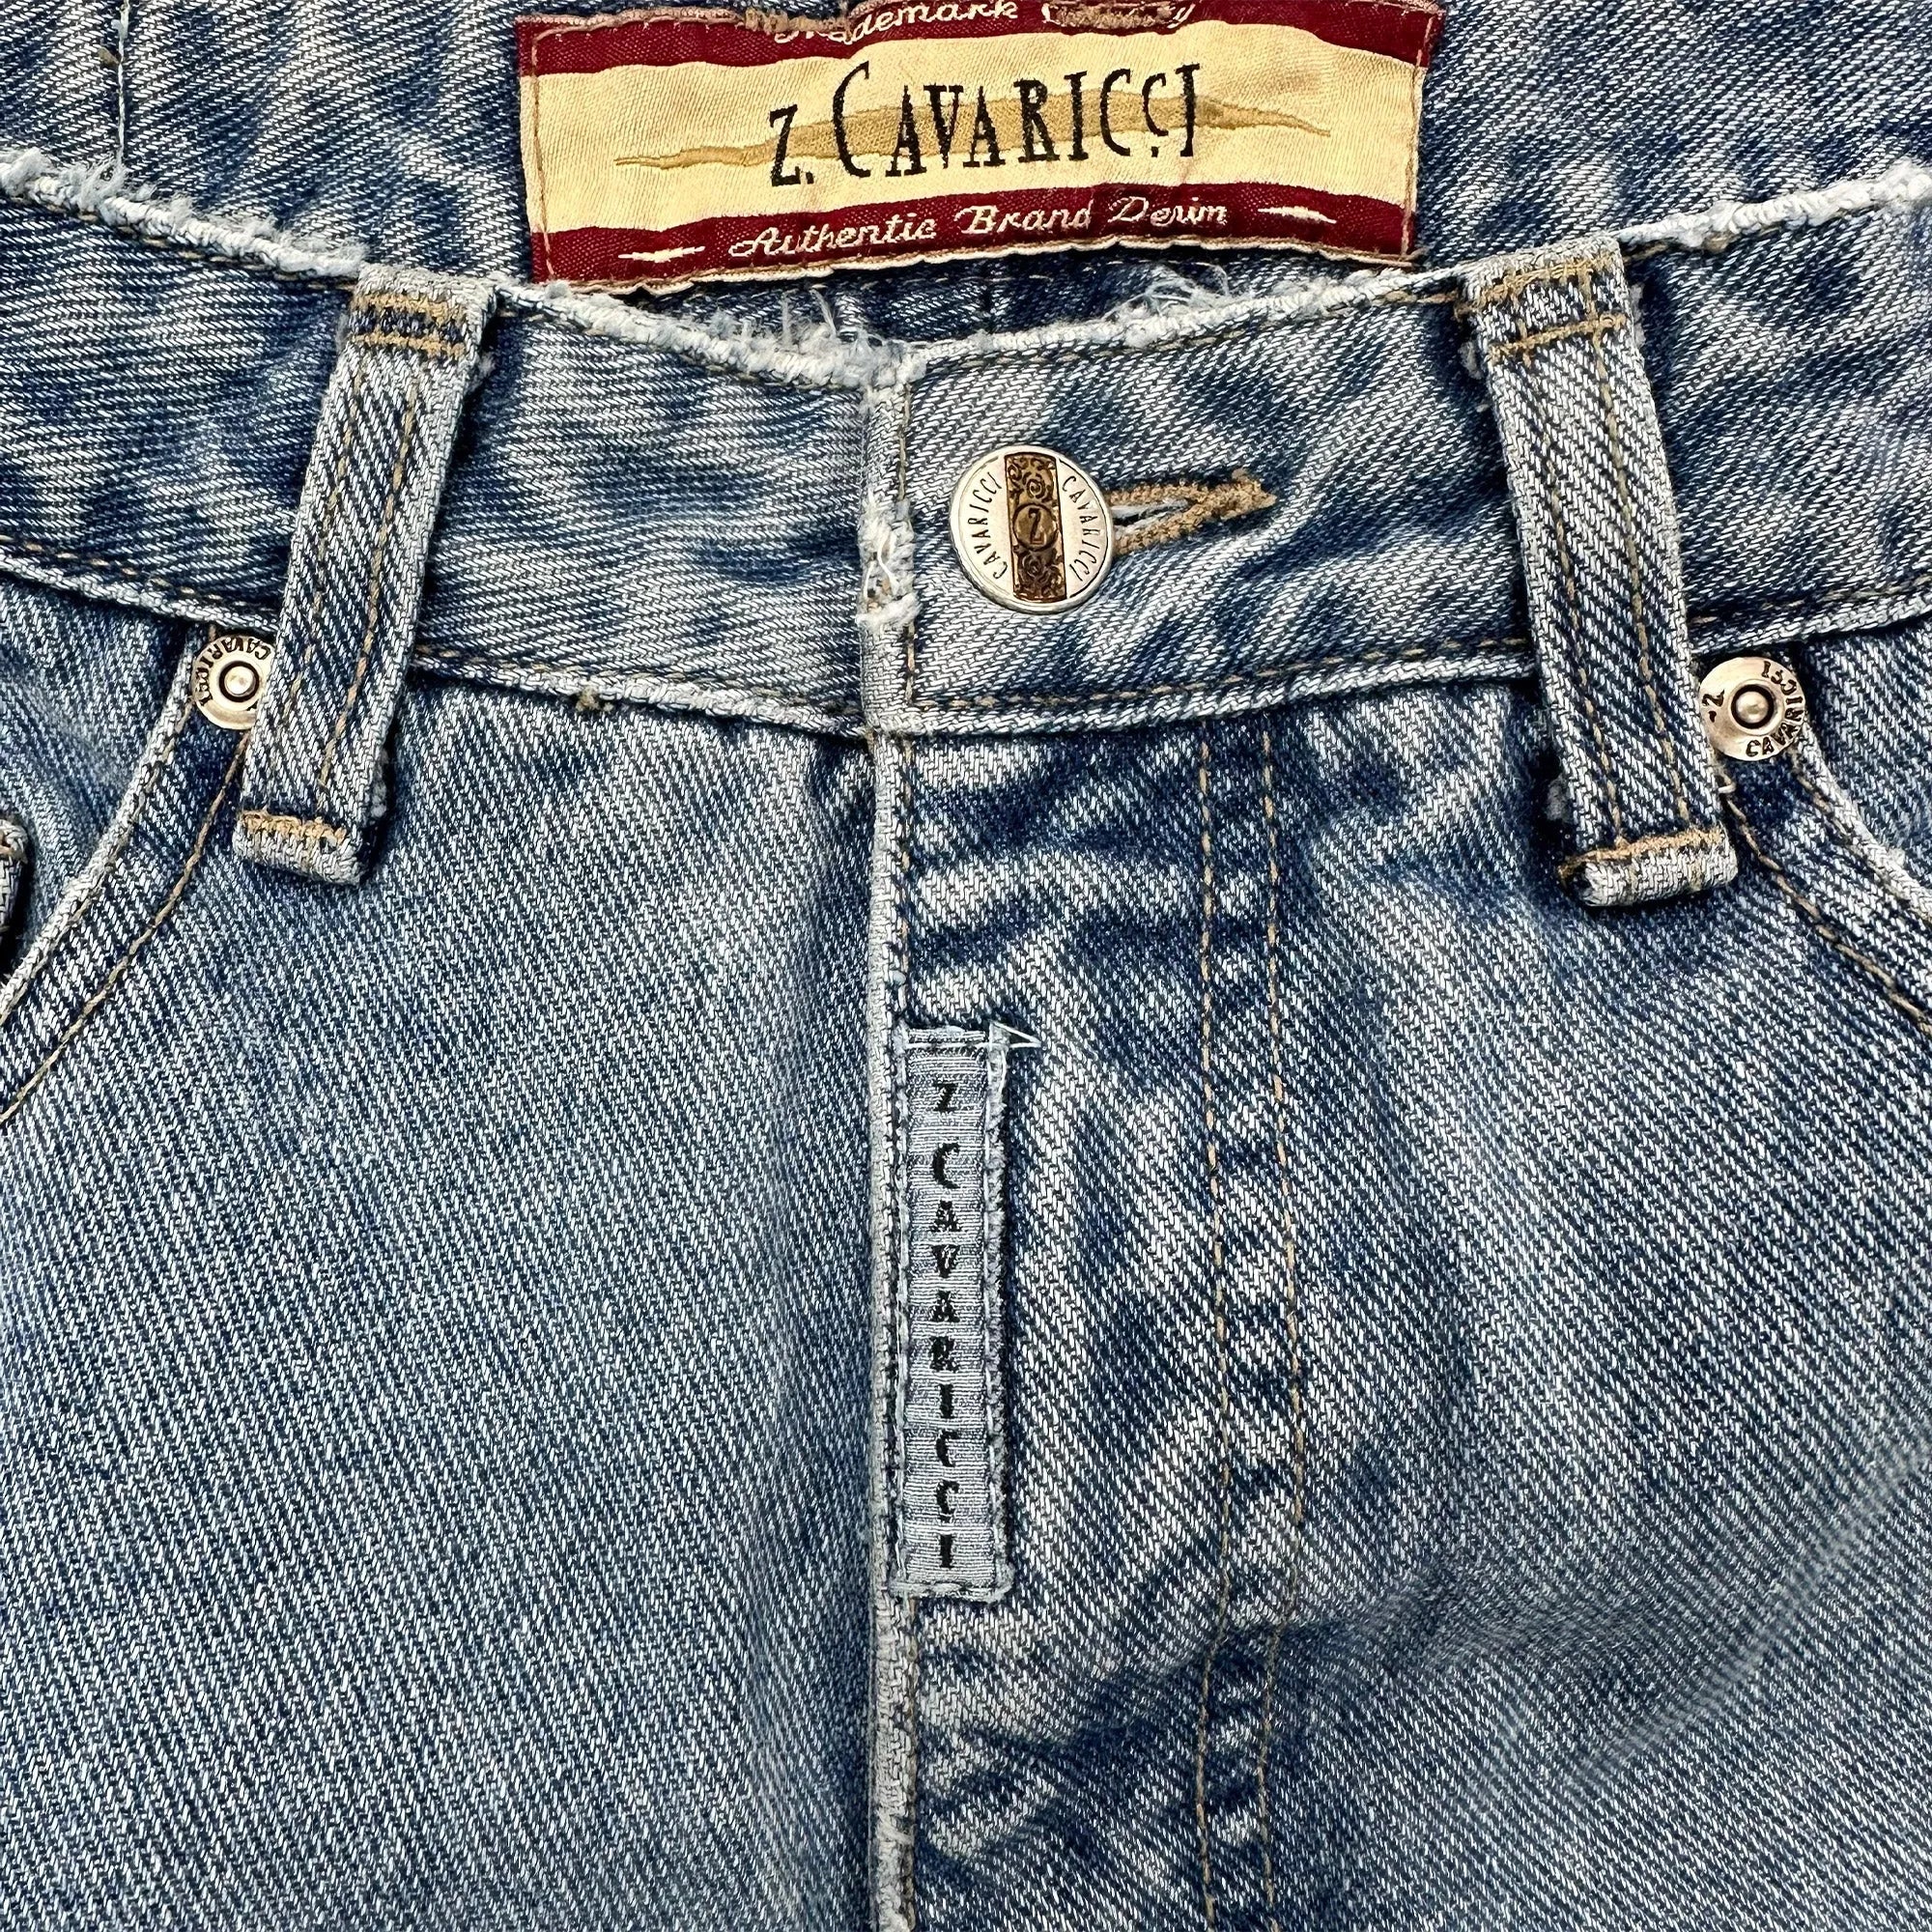 Vintage 80s Z Cavaricci Waisted Jeans - Women's - Waist 26 Great Lakes Reclaimed Denim